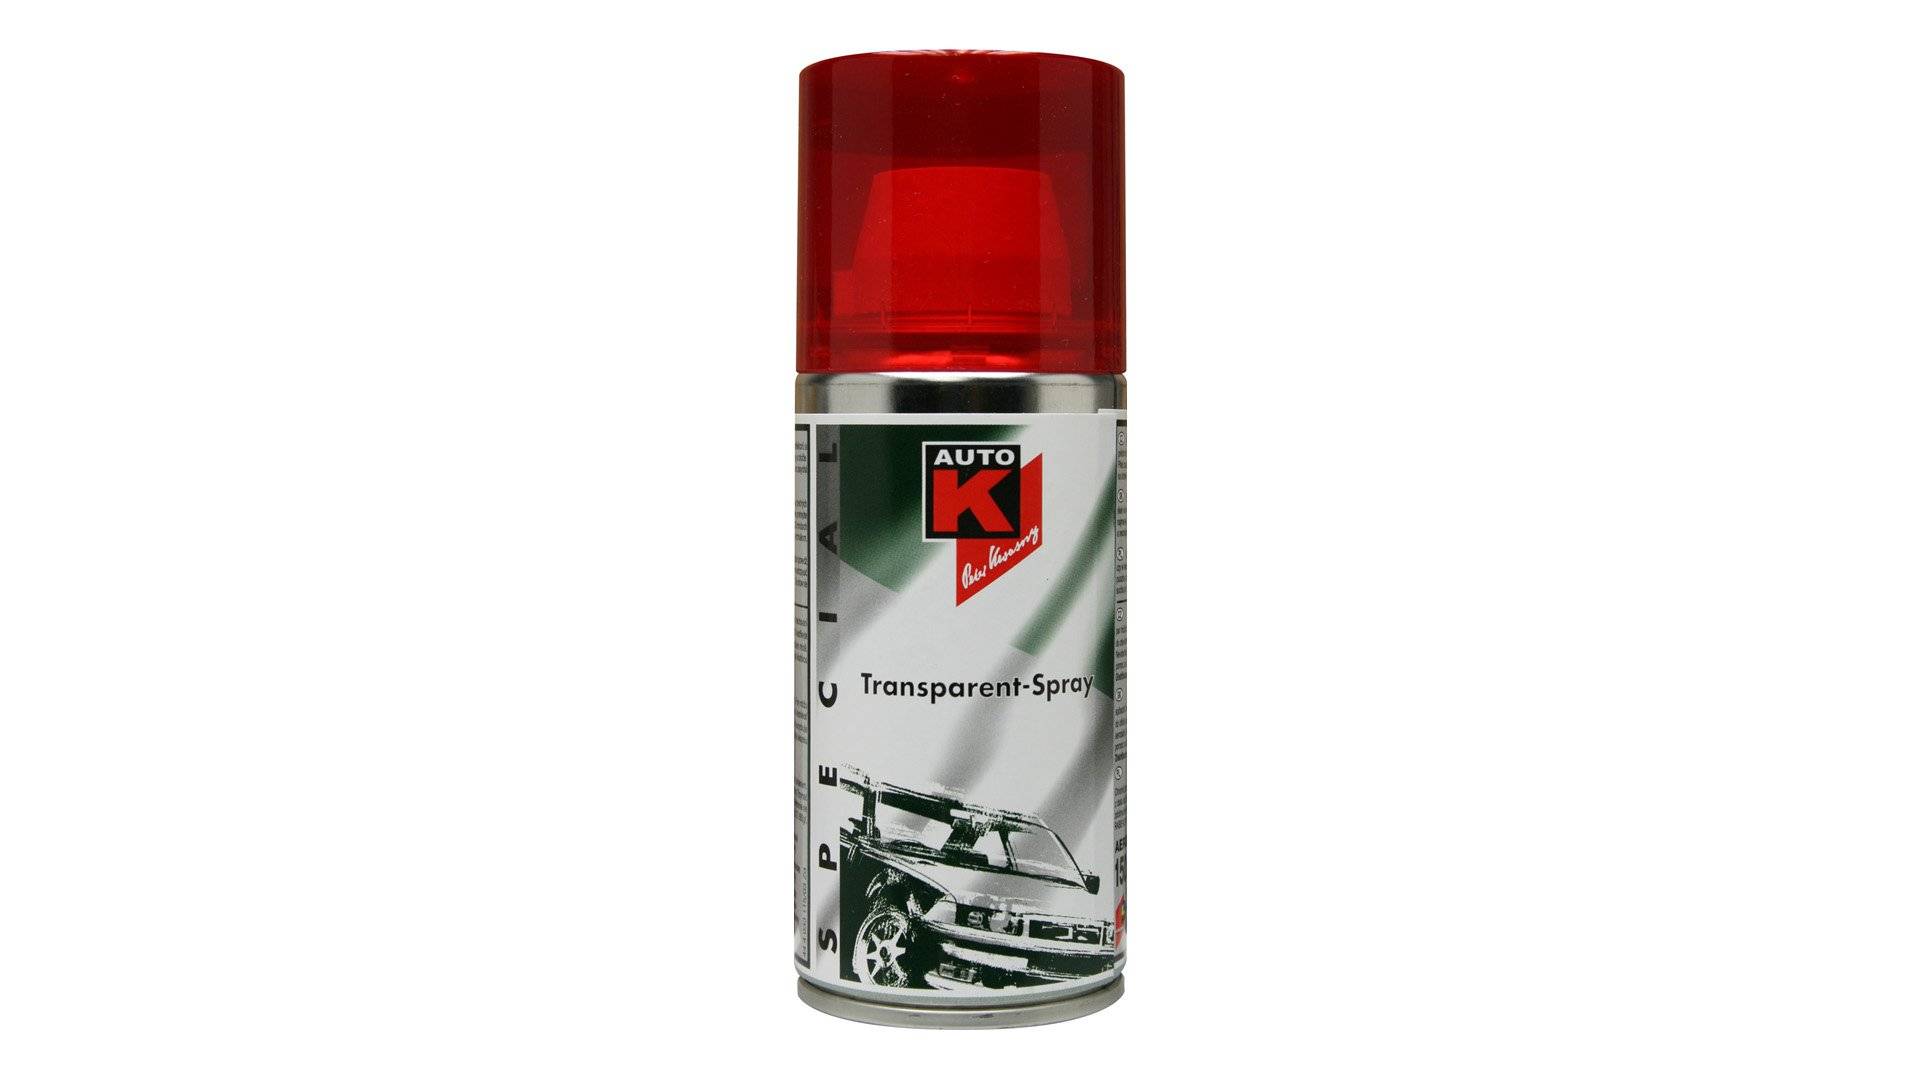 Kwasny Auto-K Transparent-Spray Lack Spray Lackspray Spraylack Glas Metall Keramik rot 150 ml von Auto K